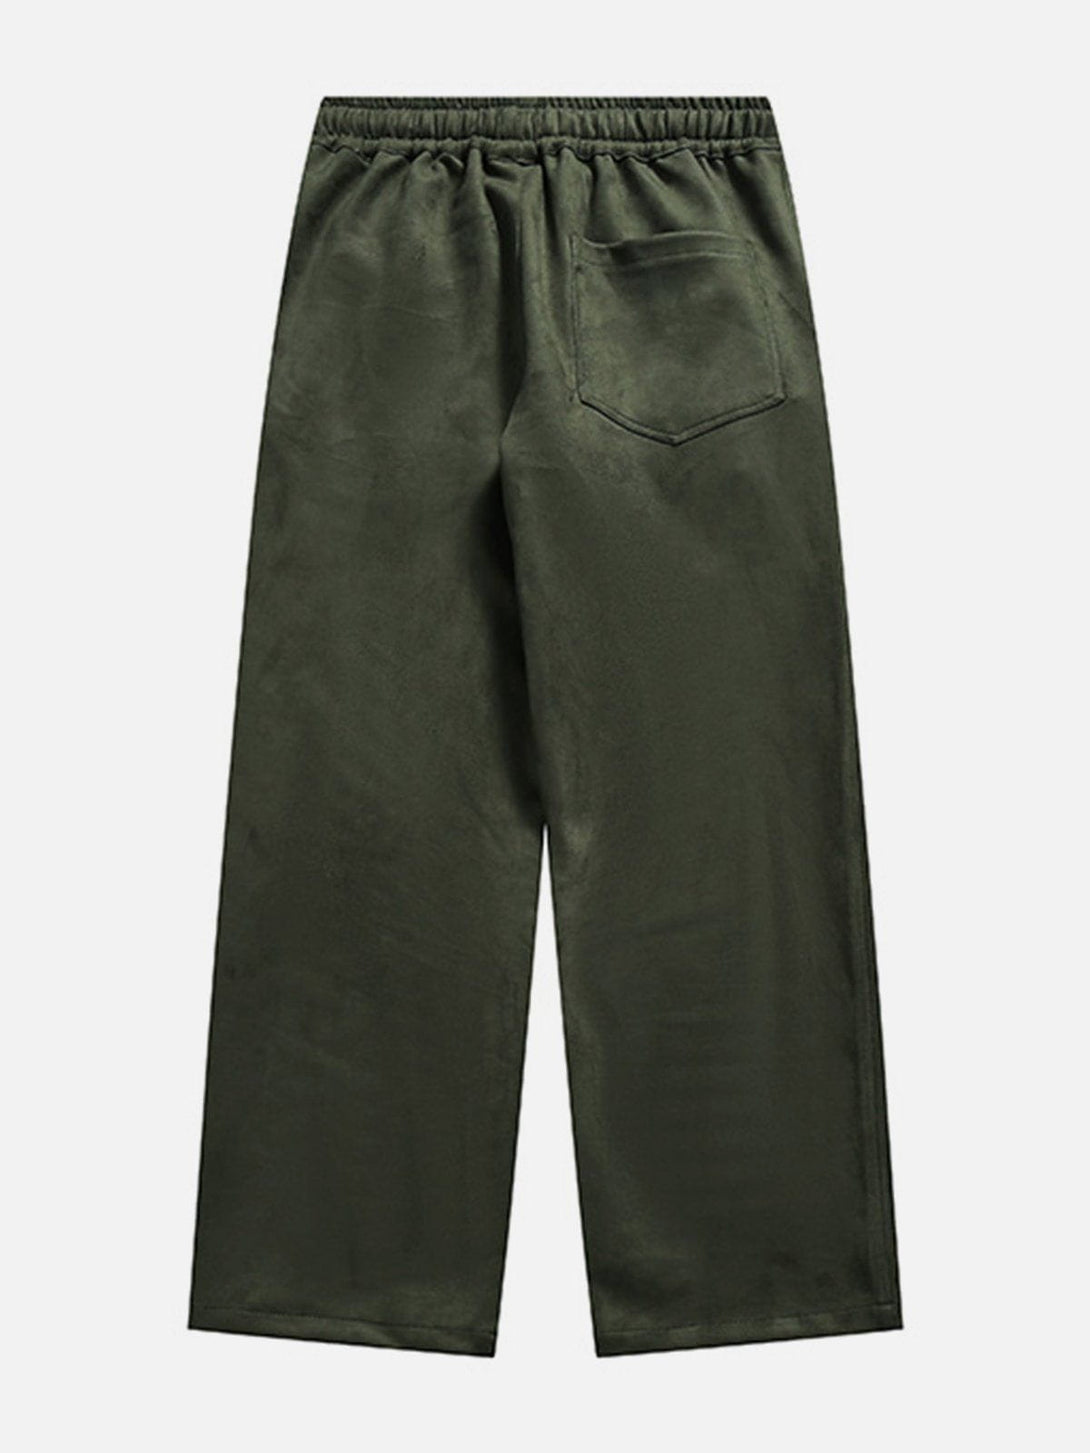 Levefly - Patchwork Letter Drawstring Pants - Streetwear Fashion - levefly.com